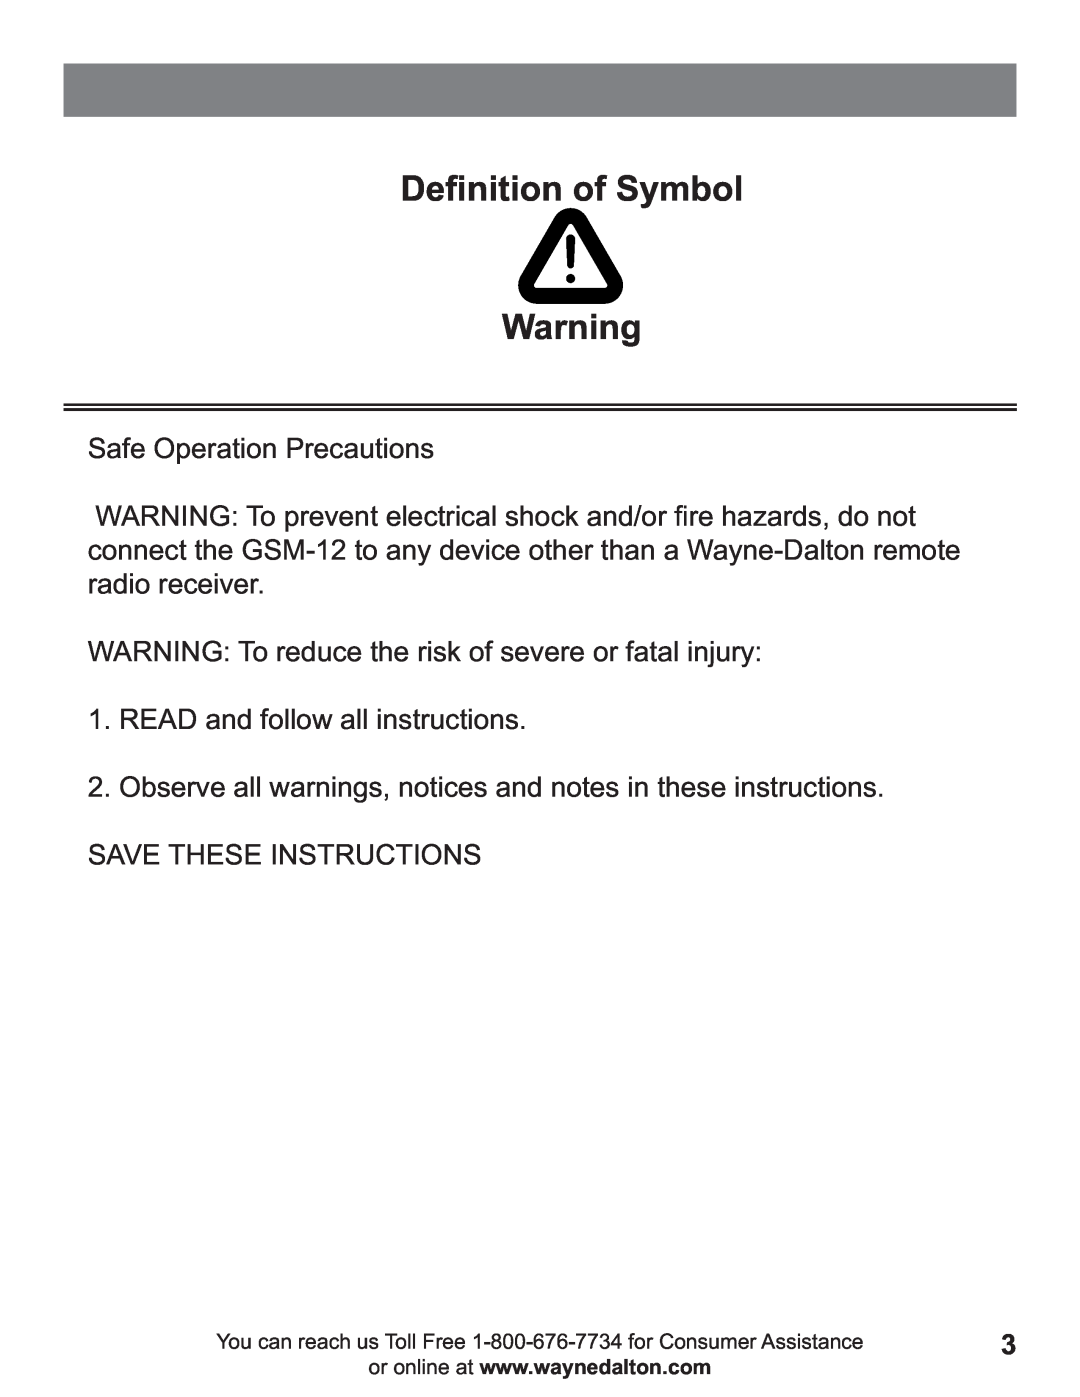 Wayne-Dalton GSM-12 operating instructions Deﬁnition of Symbol 